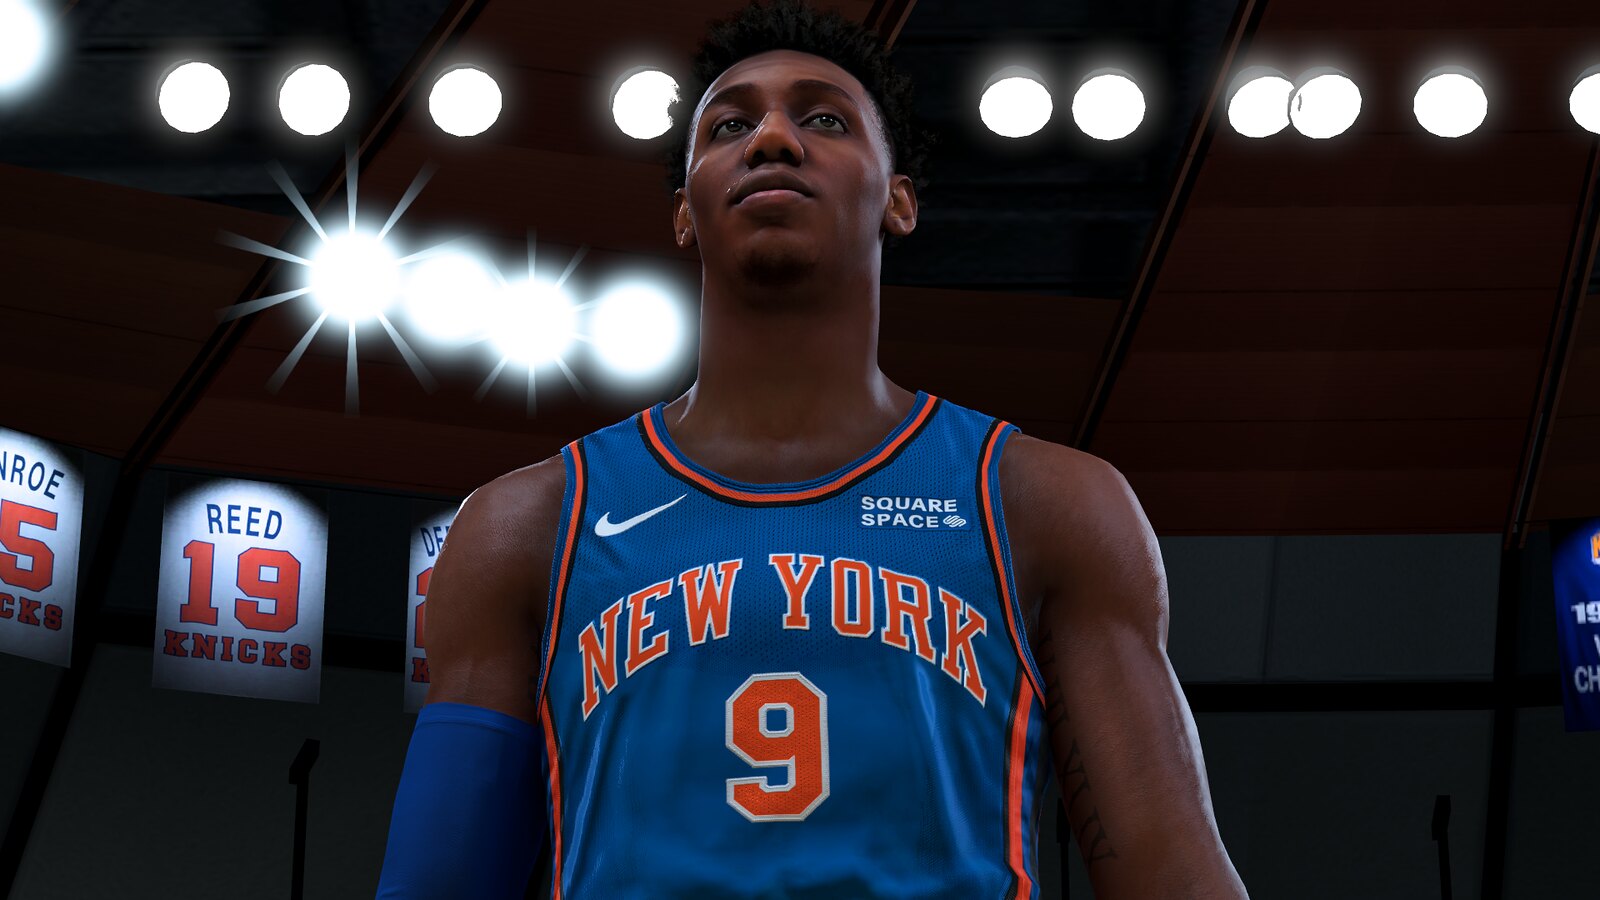 NBA 2K22 New York Knicks Jerseys (2023 Concept) - Shuajota: NBA